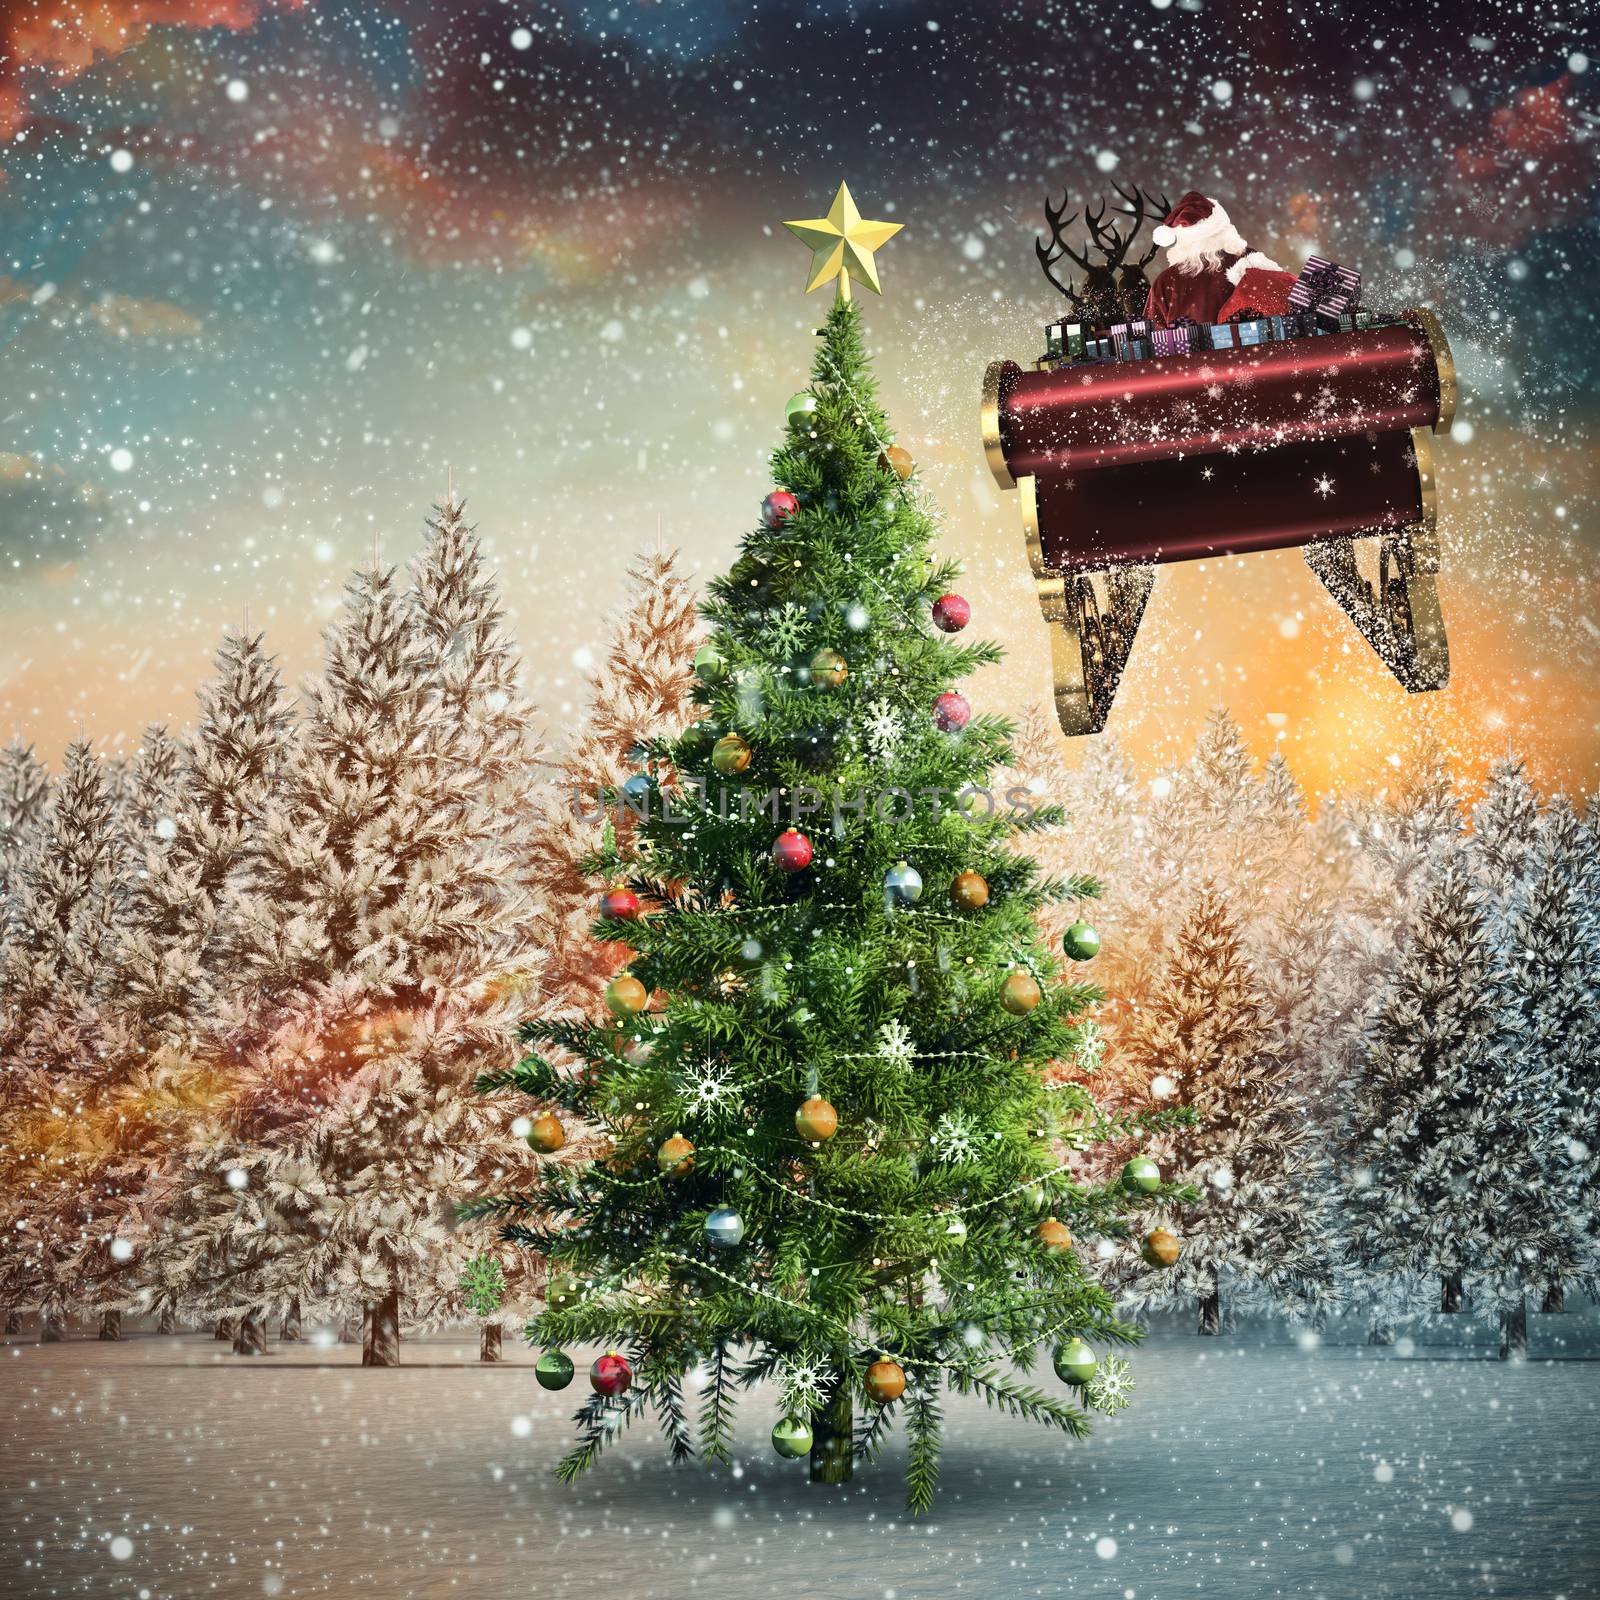 Santa flying his sleigh against christmas tree in snowy landscape